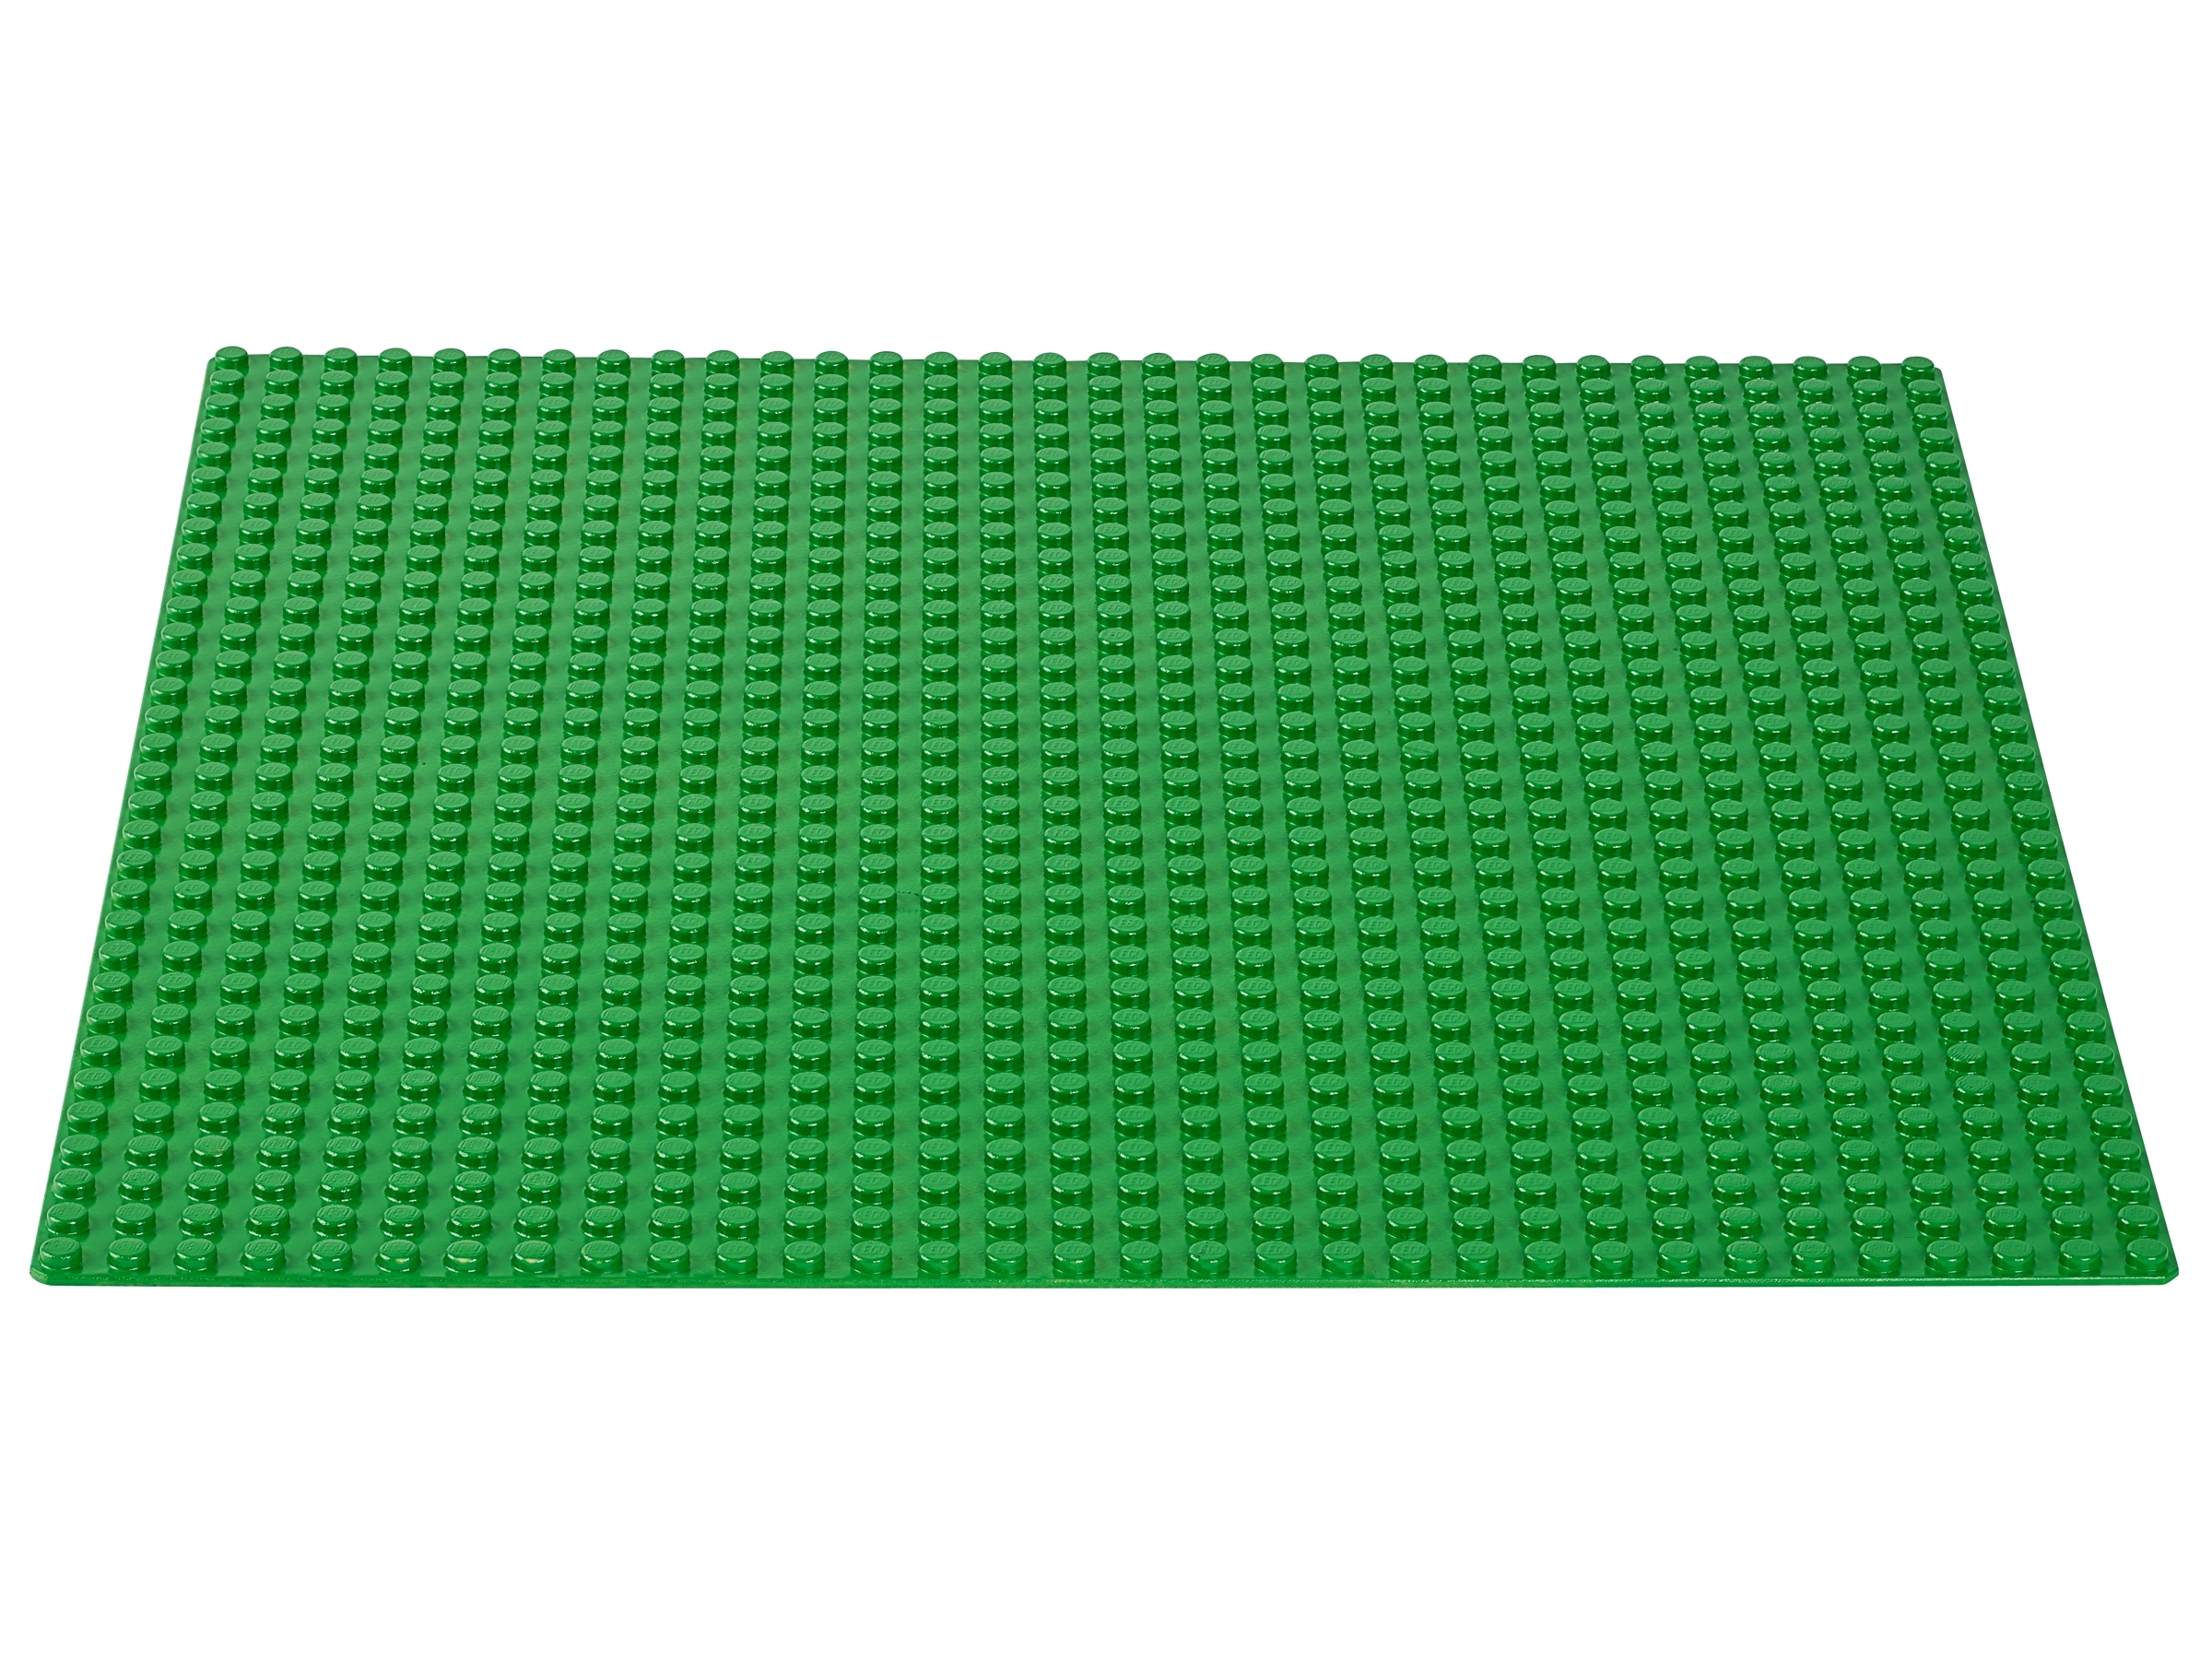 Choice New LEGO Plates in Dark Green 